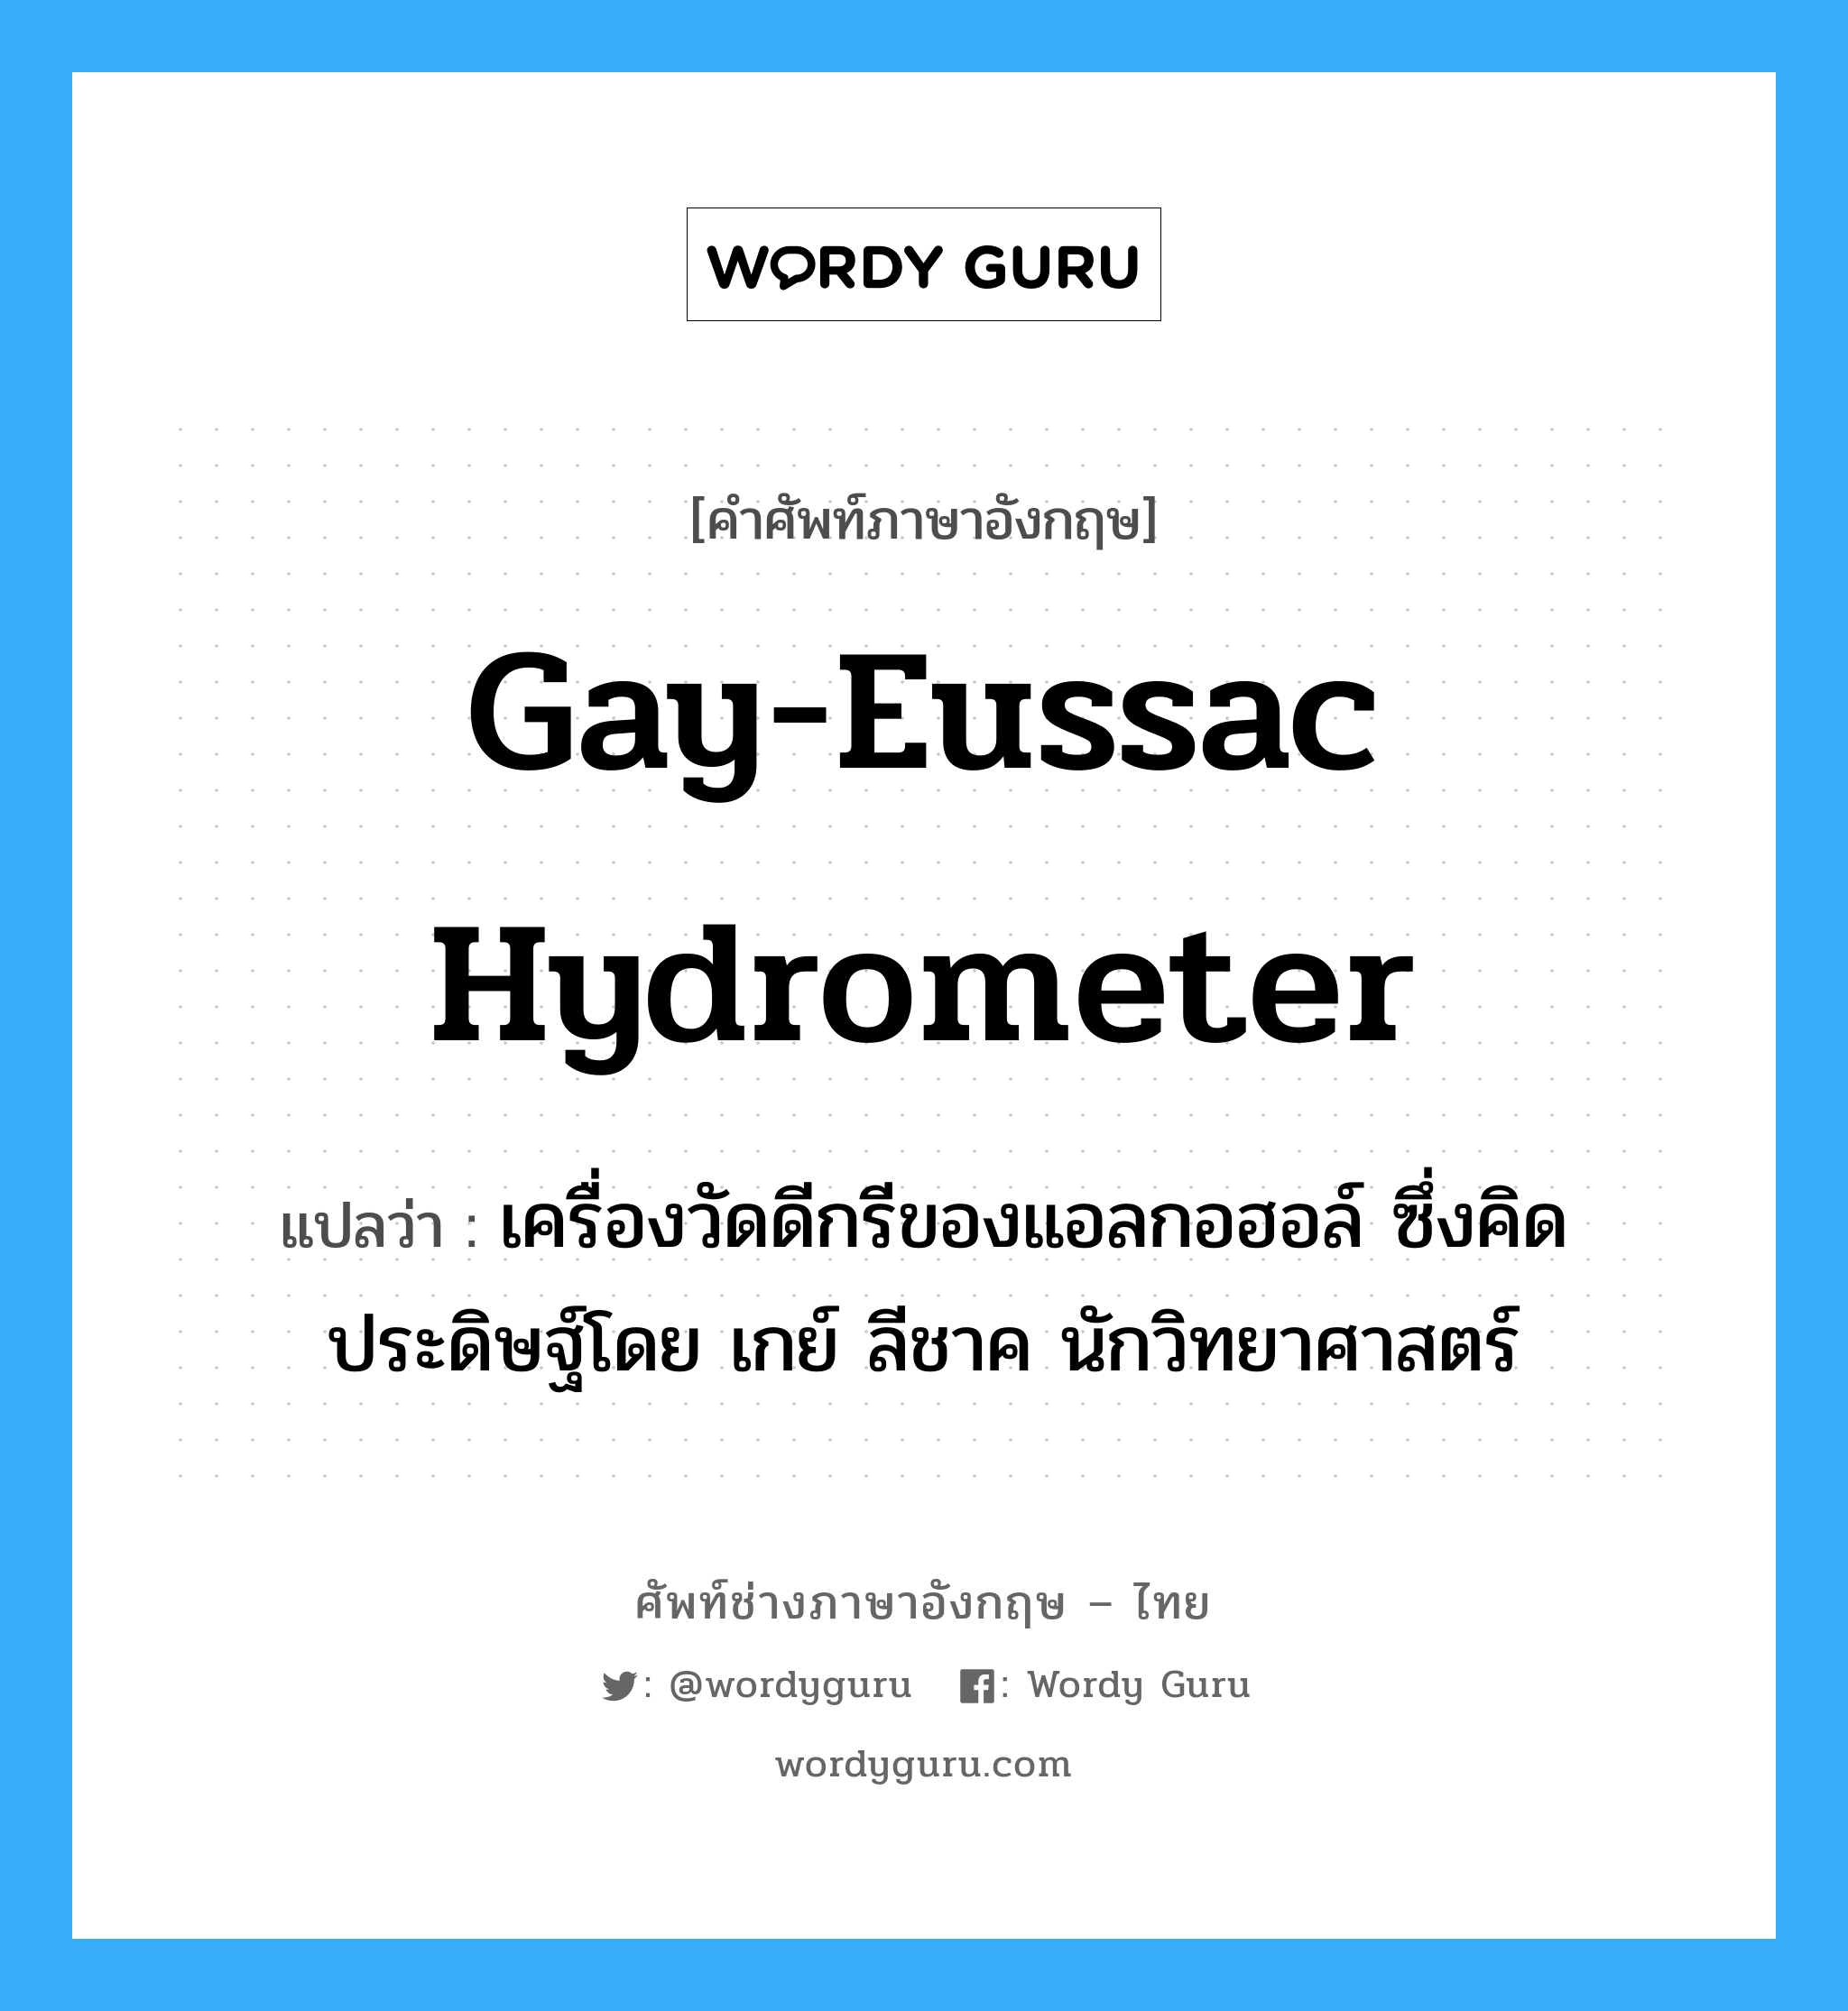 Gay-Eussac hydrometer แปลว่า?, คำศัพท์ช่างภาษาอังกฤษ - ไทย Gay-Eussac hydrometer คำศัพท์ภาษาอังกฤษ Gay-Eussac hydrometer แปลว่า เครื่องวัดดีกรีของแอลกอฮอล์ ซึ่งคิดประดิษฐ์โดย เกย์ ลีชาค นักวิทยาศาสตร์